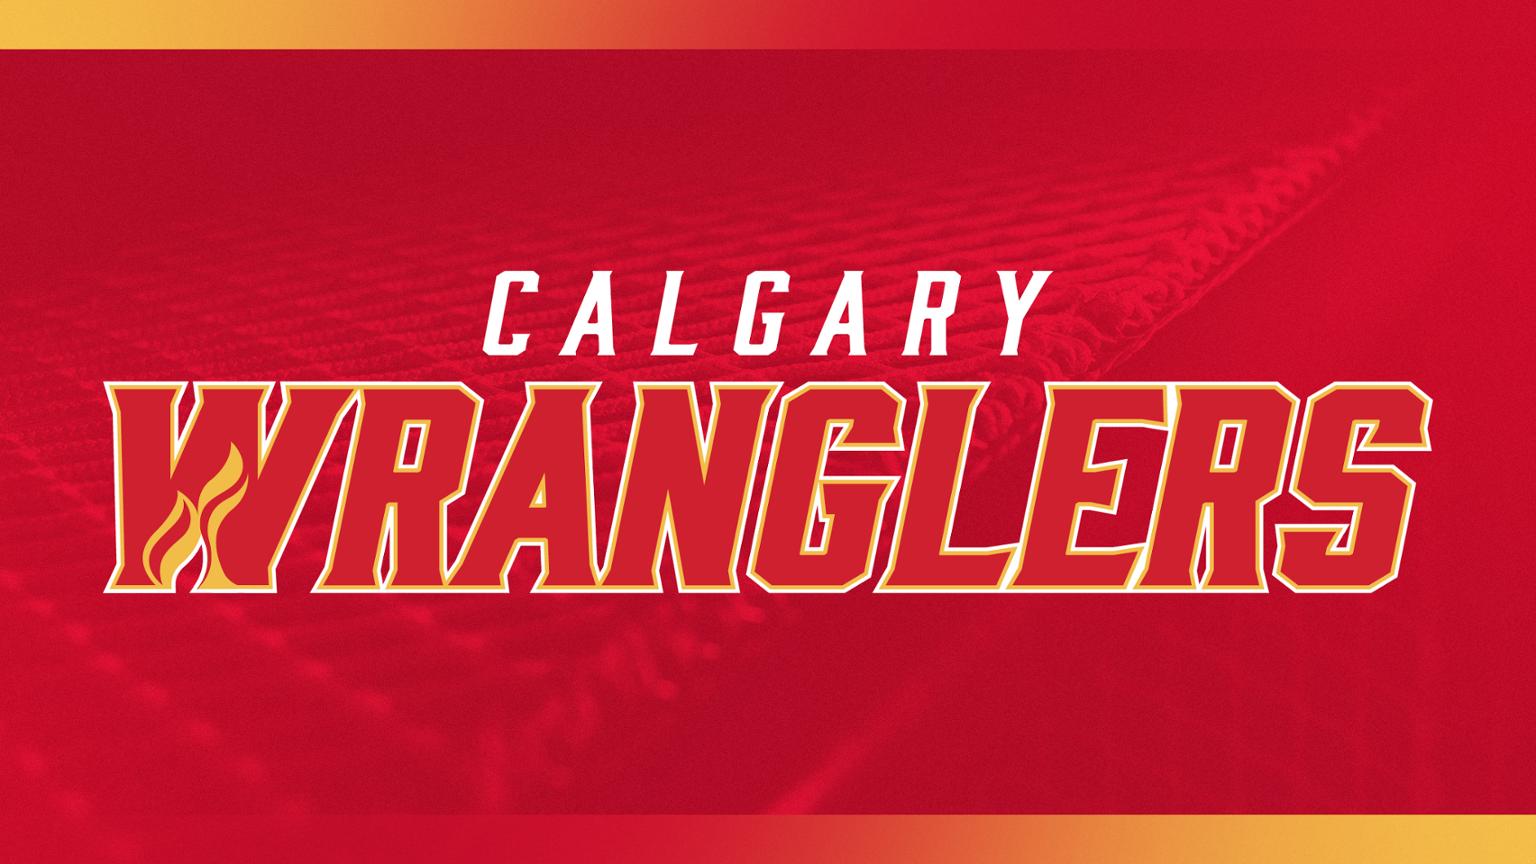 Calgary Wranglers logo with hockey net closeup background with red overlay